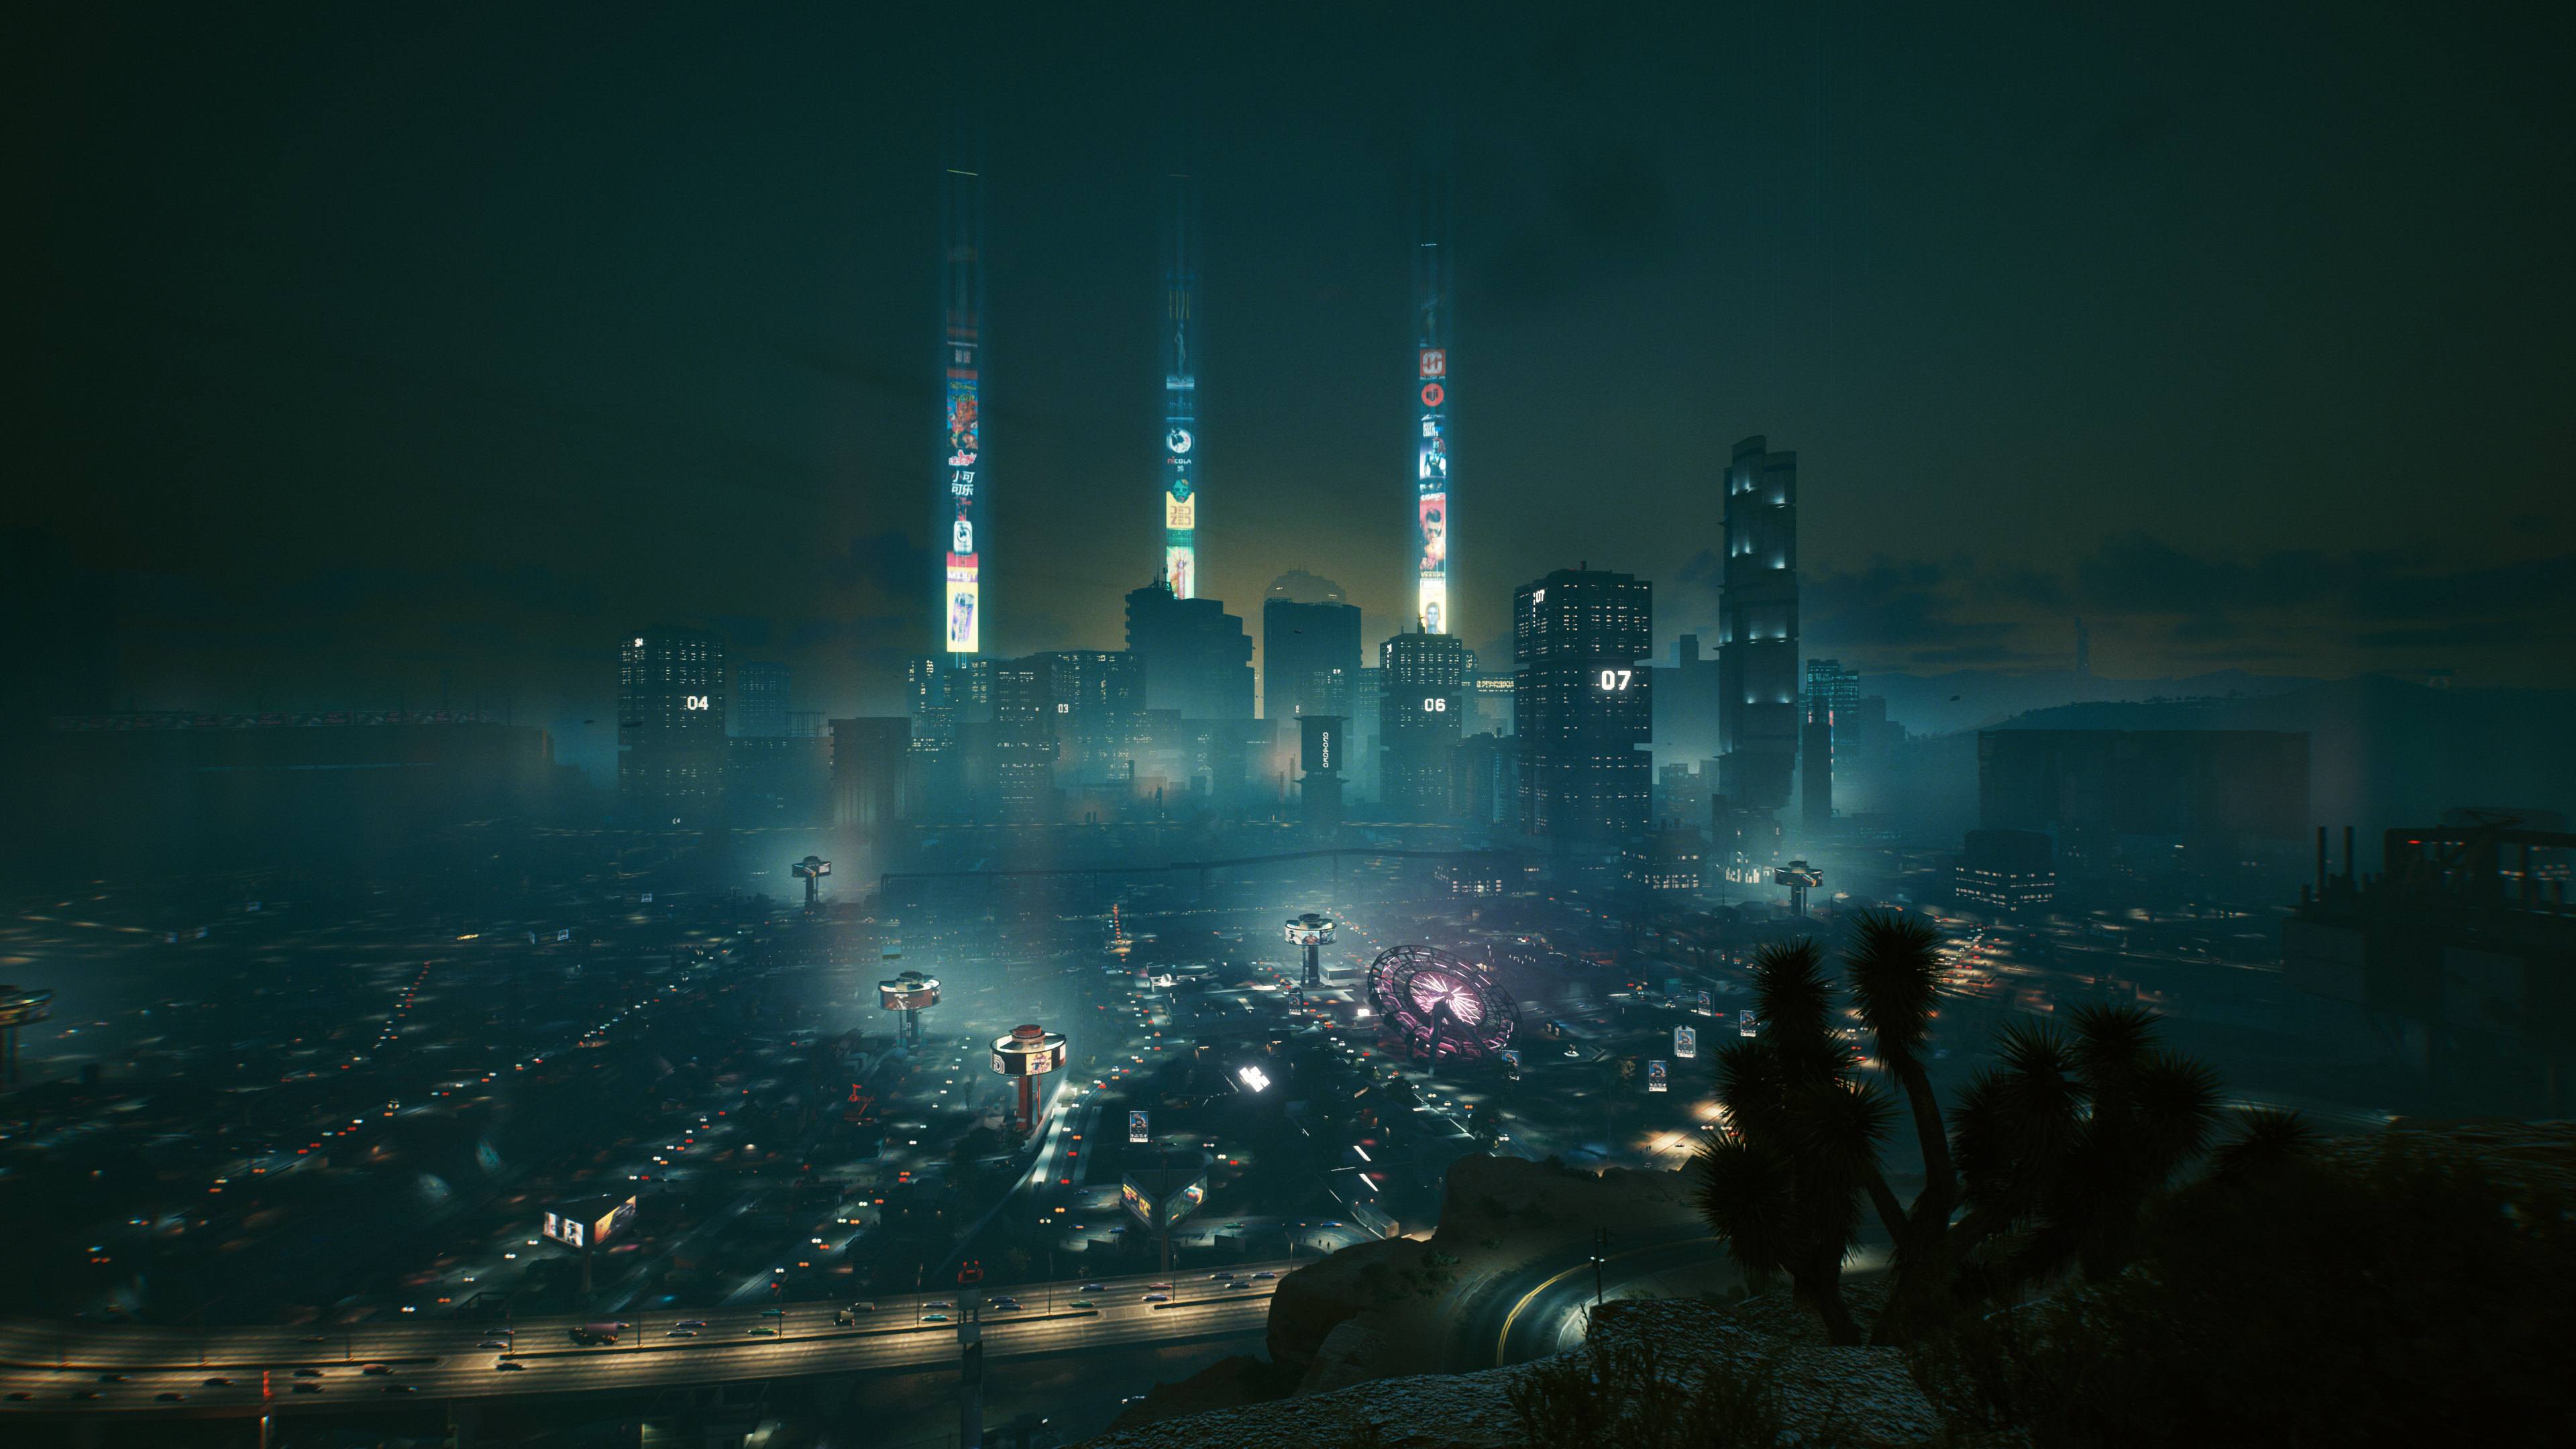  Watch this atmospheric tour of Cyberpunk 2077's Night City 